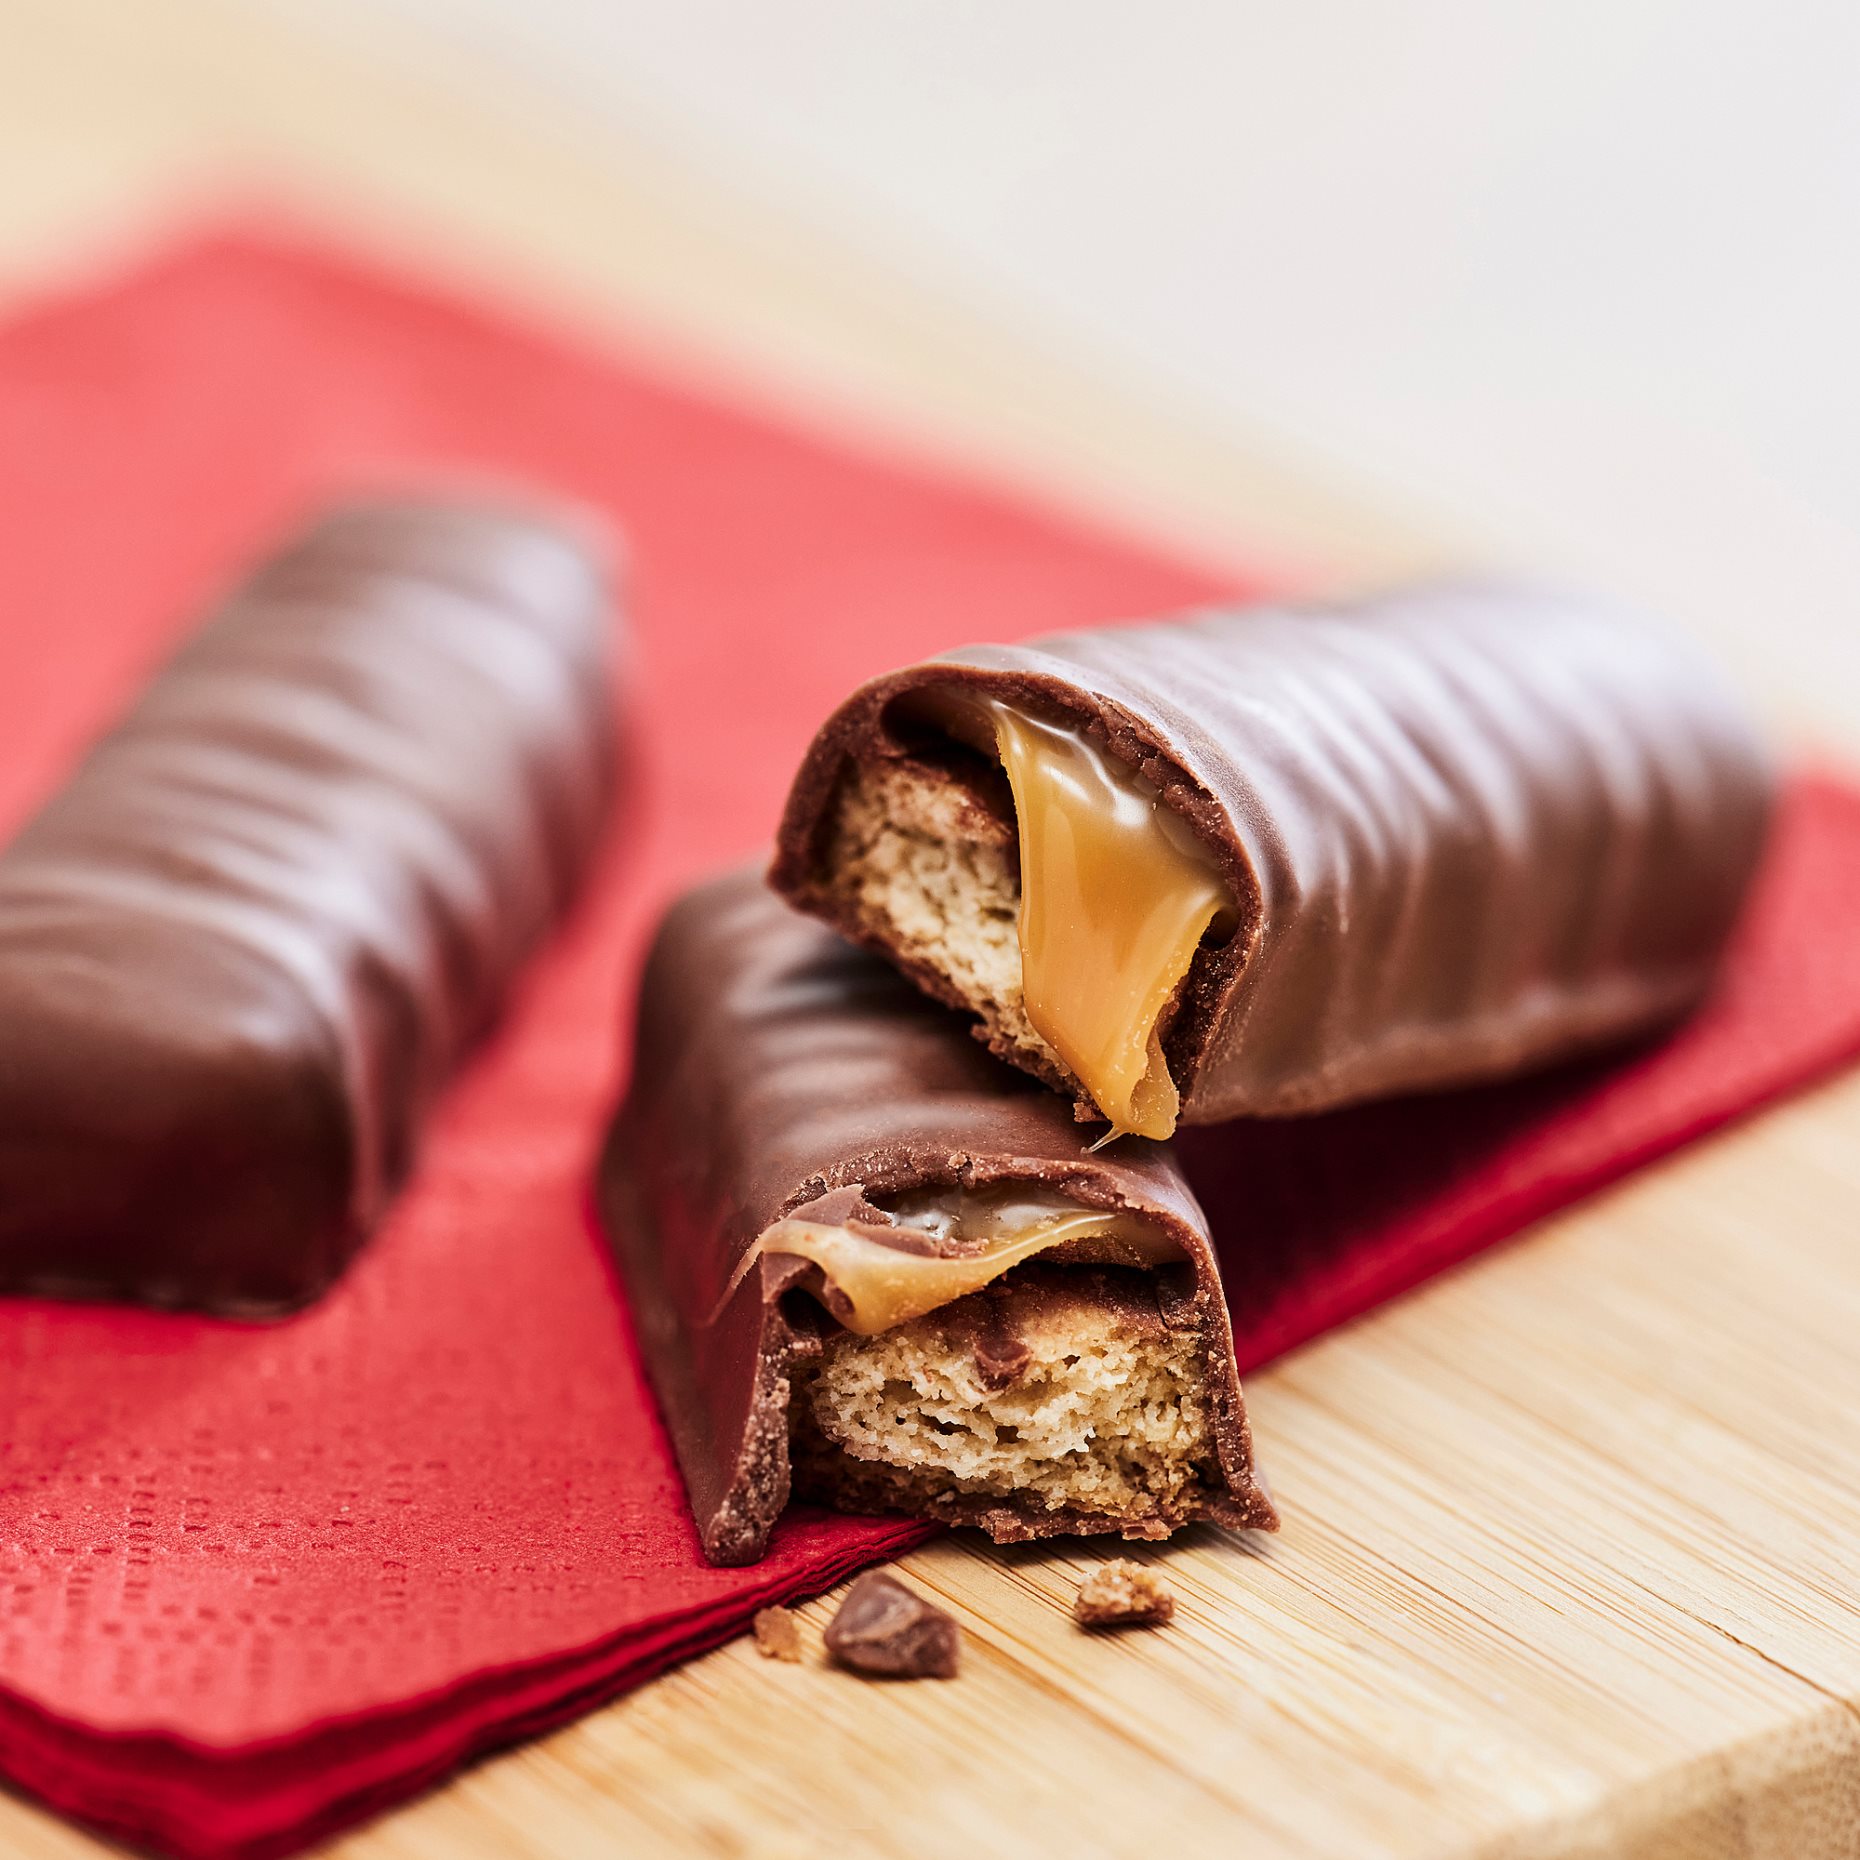 BELONING, γεμιστά σοκολατάκια με μπρισκότο βρώμης και καραμέλα, 40 g, 905.251.69